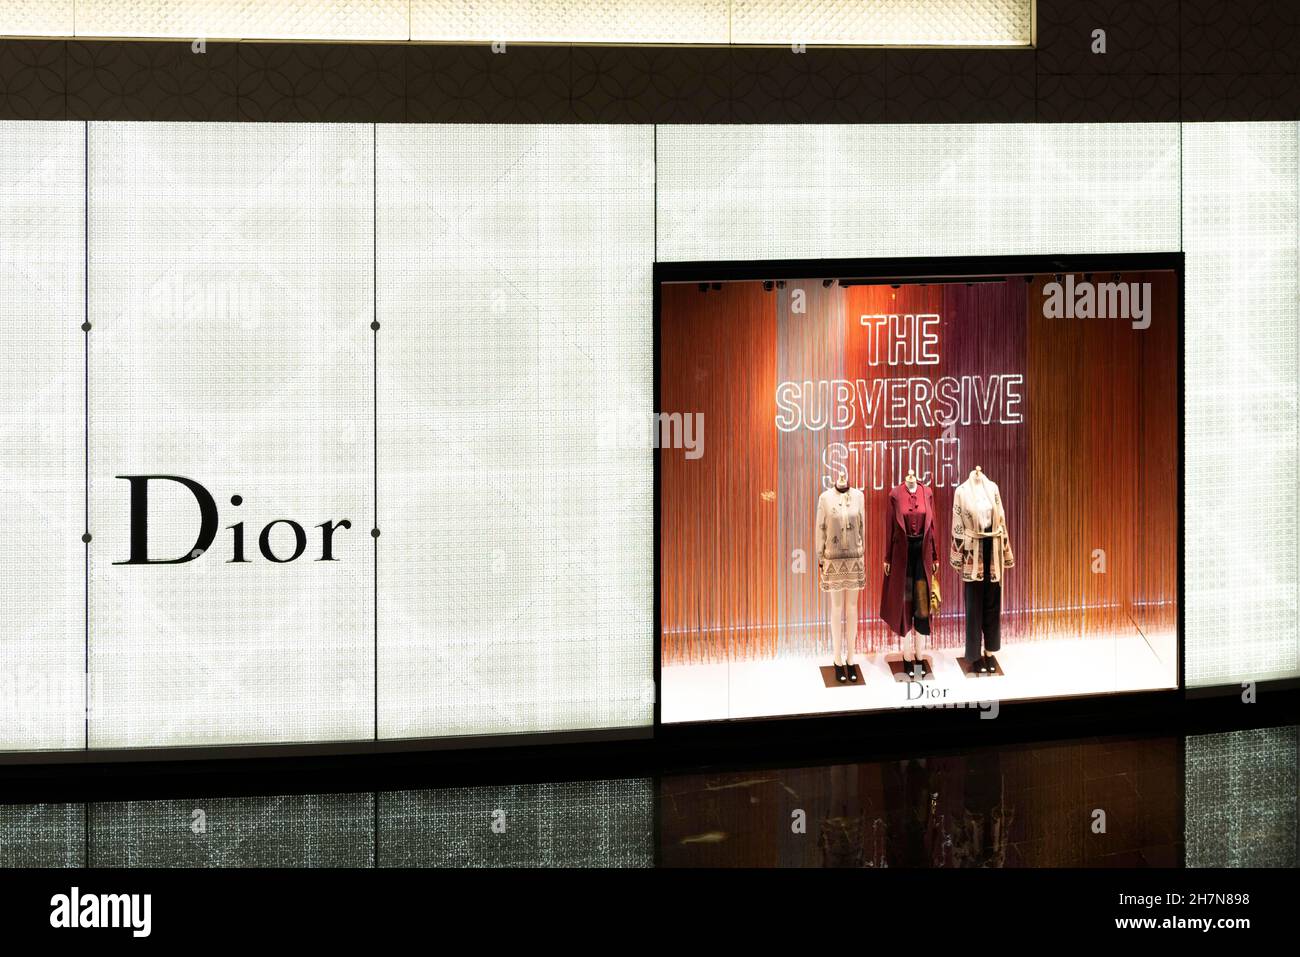 Dior shop window illuminated Stock Photo